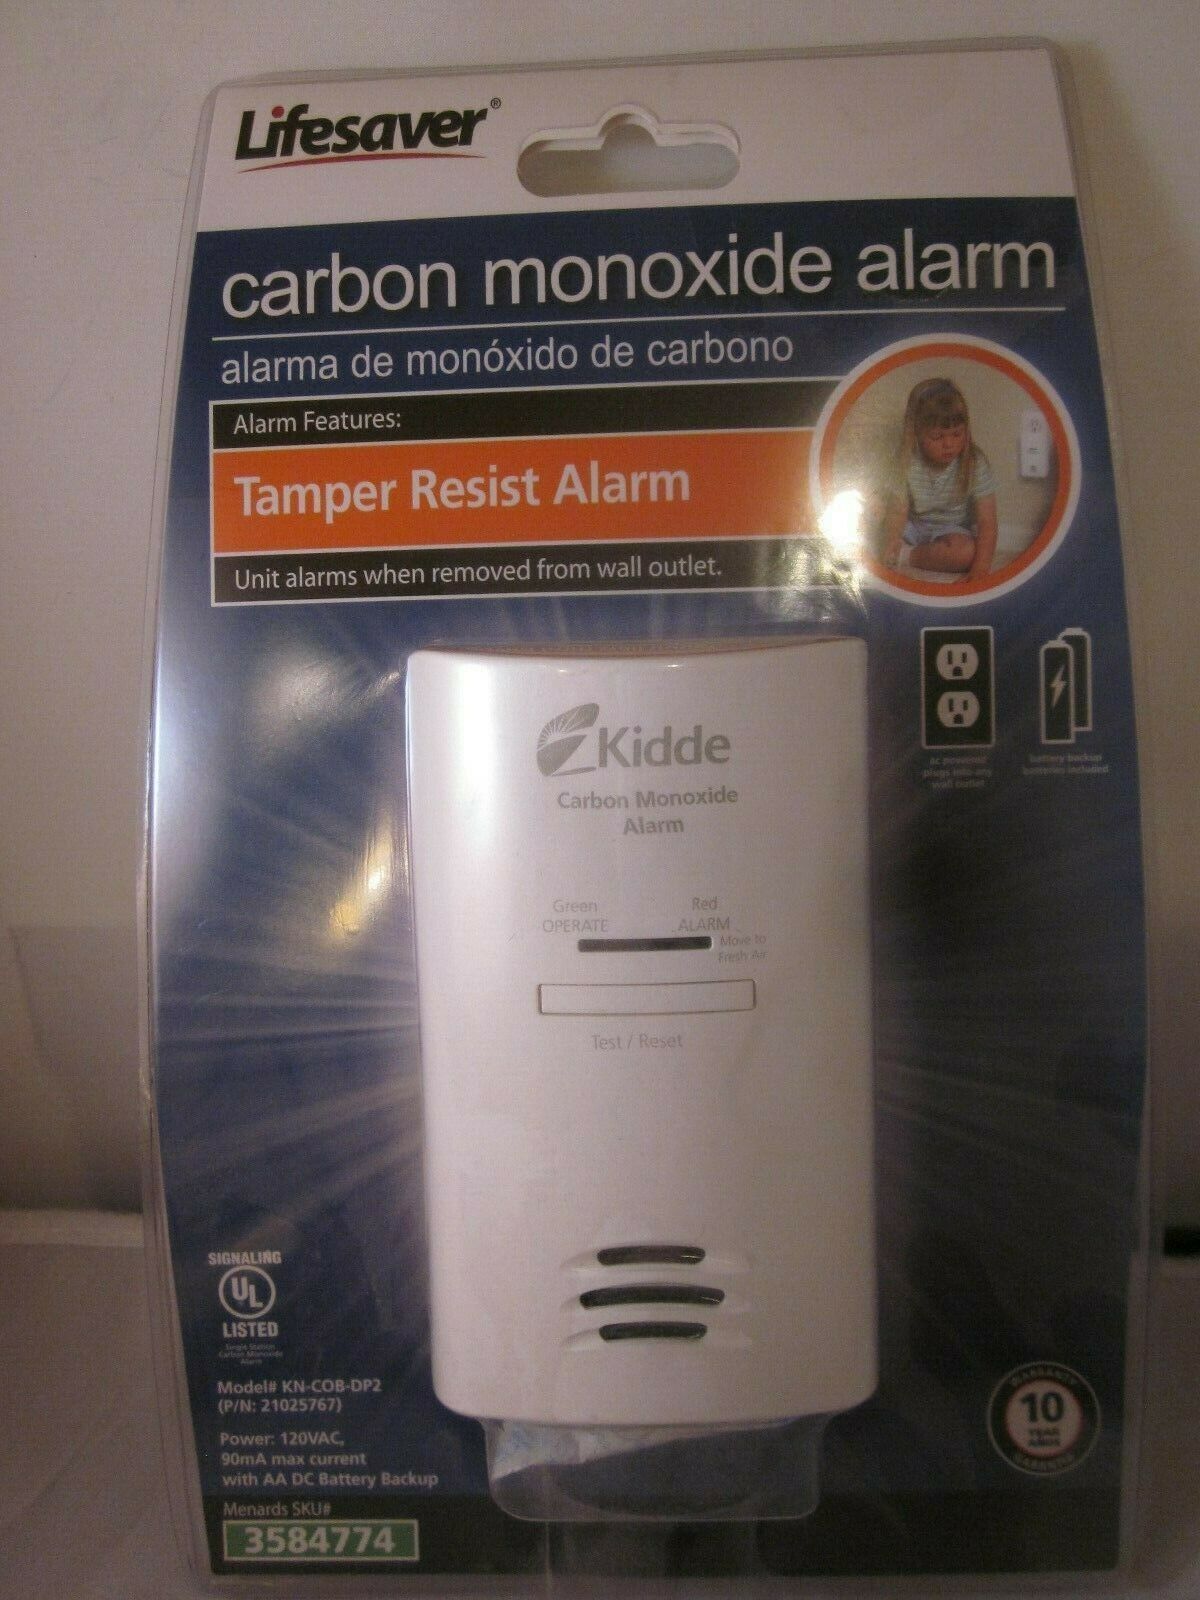 Lifesaver Kidde Carbon Monoxide Alarm Tamper Resist Alarm Brand New - $19.99